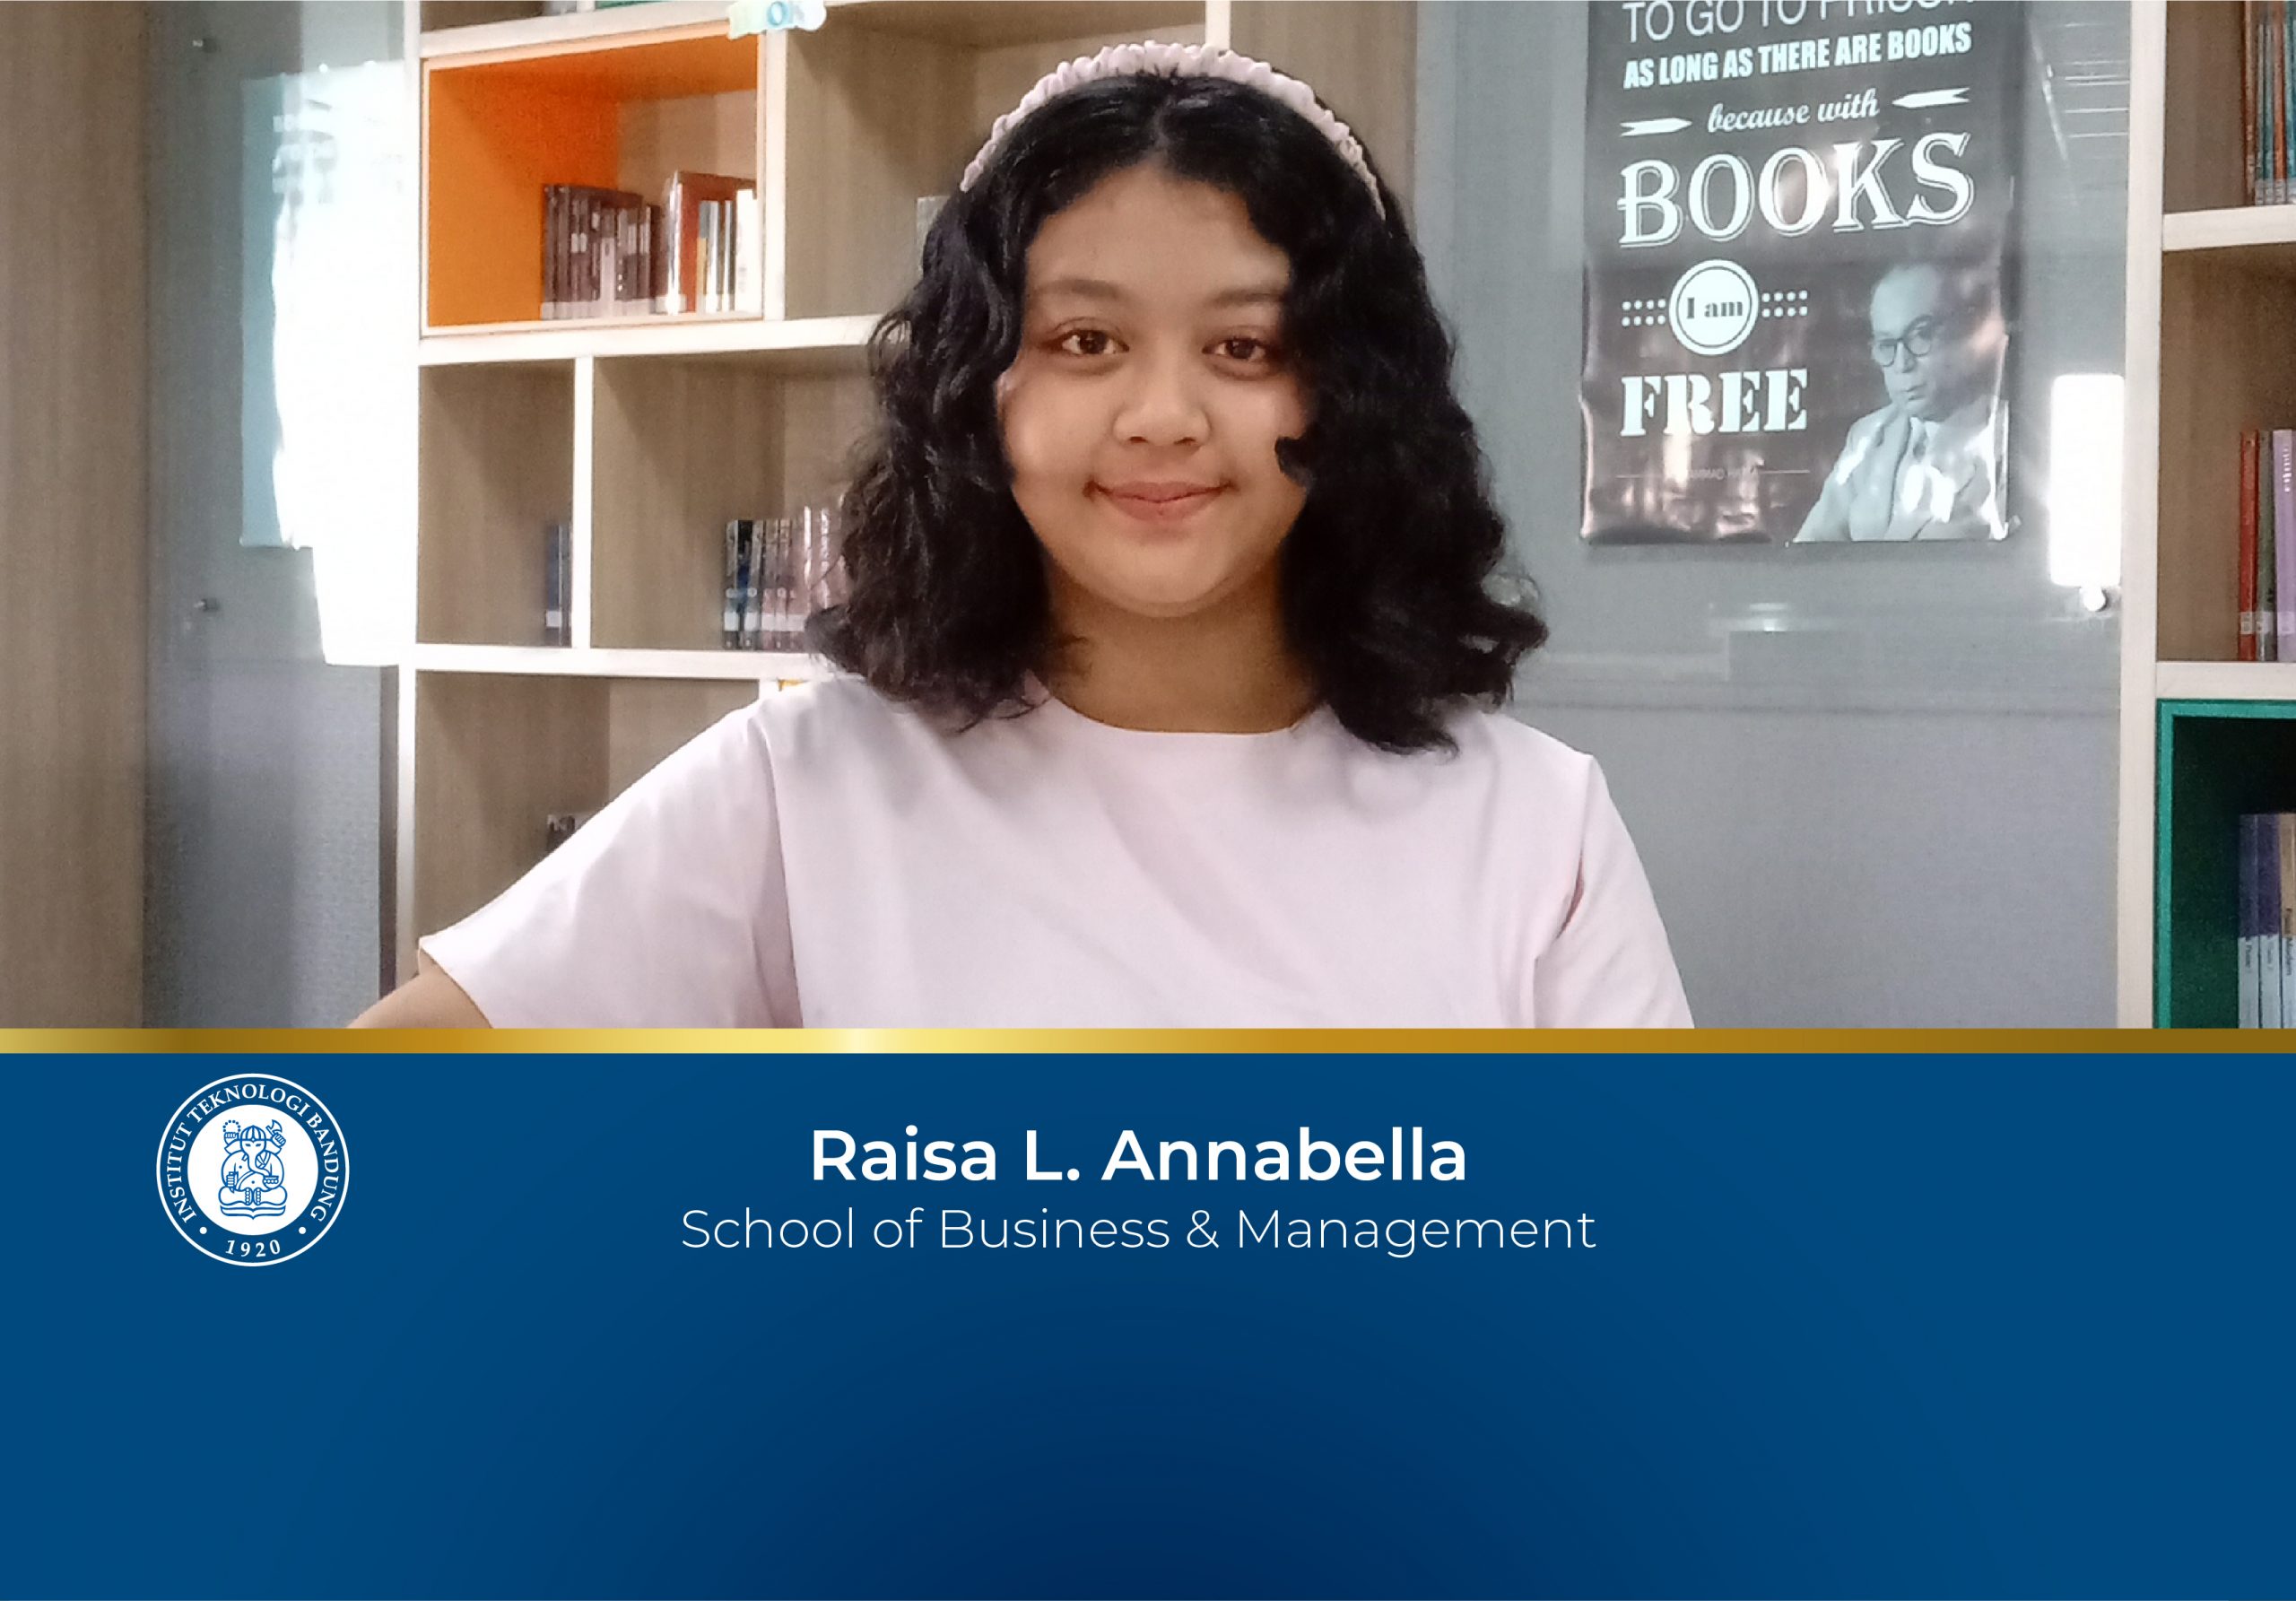 Raisa L. Annabella, Class of 2021